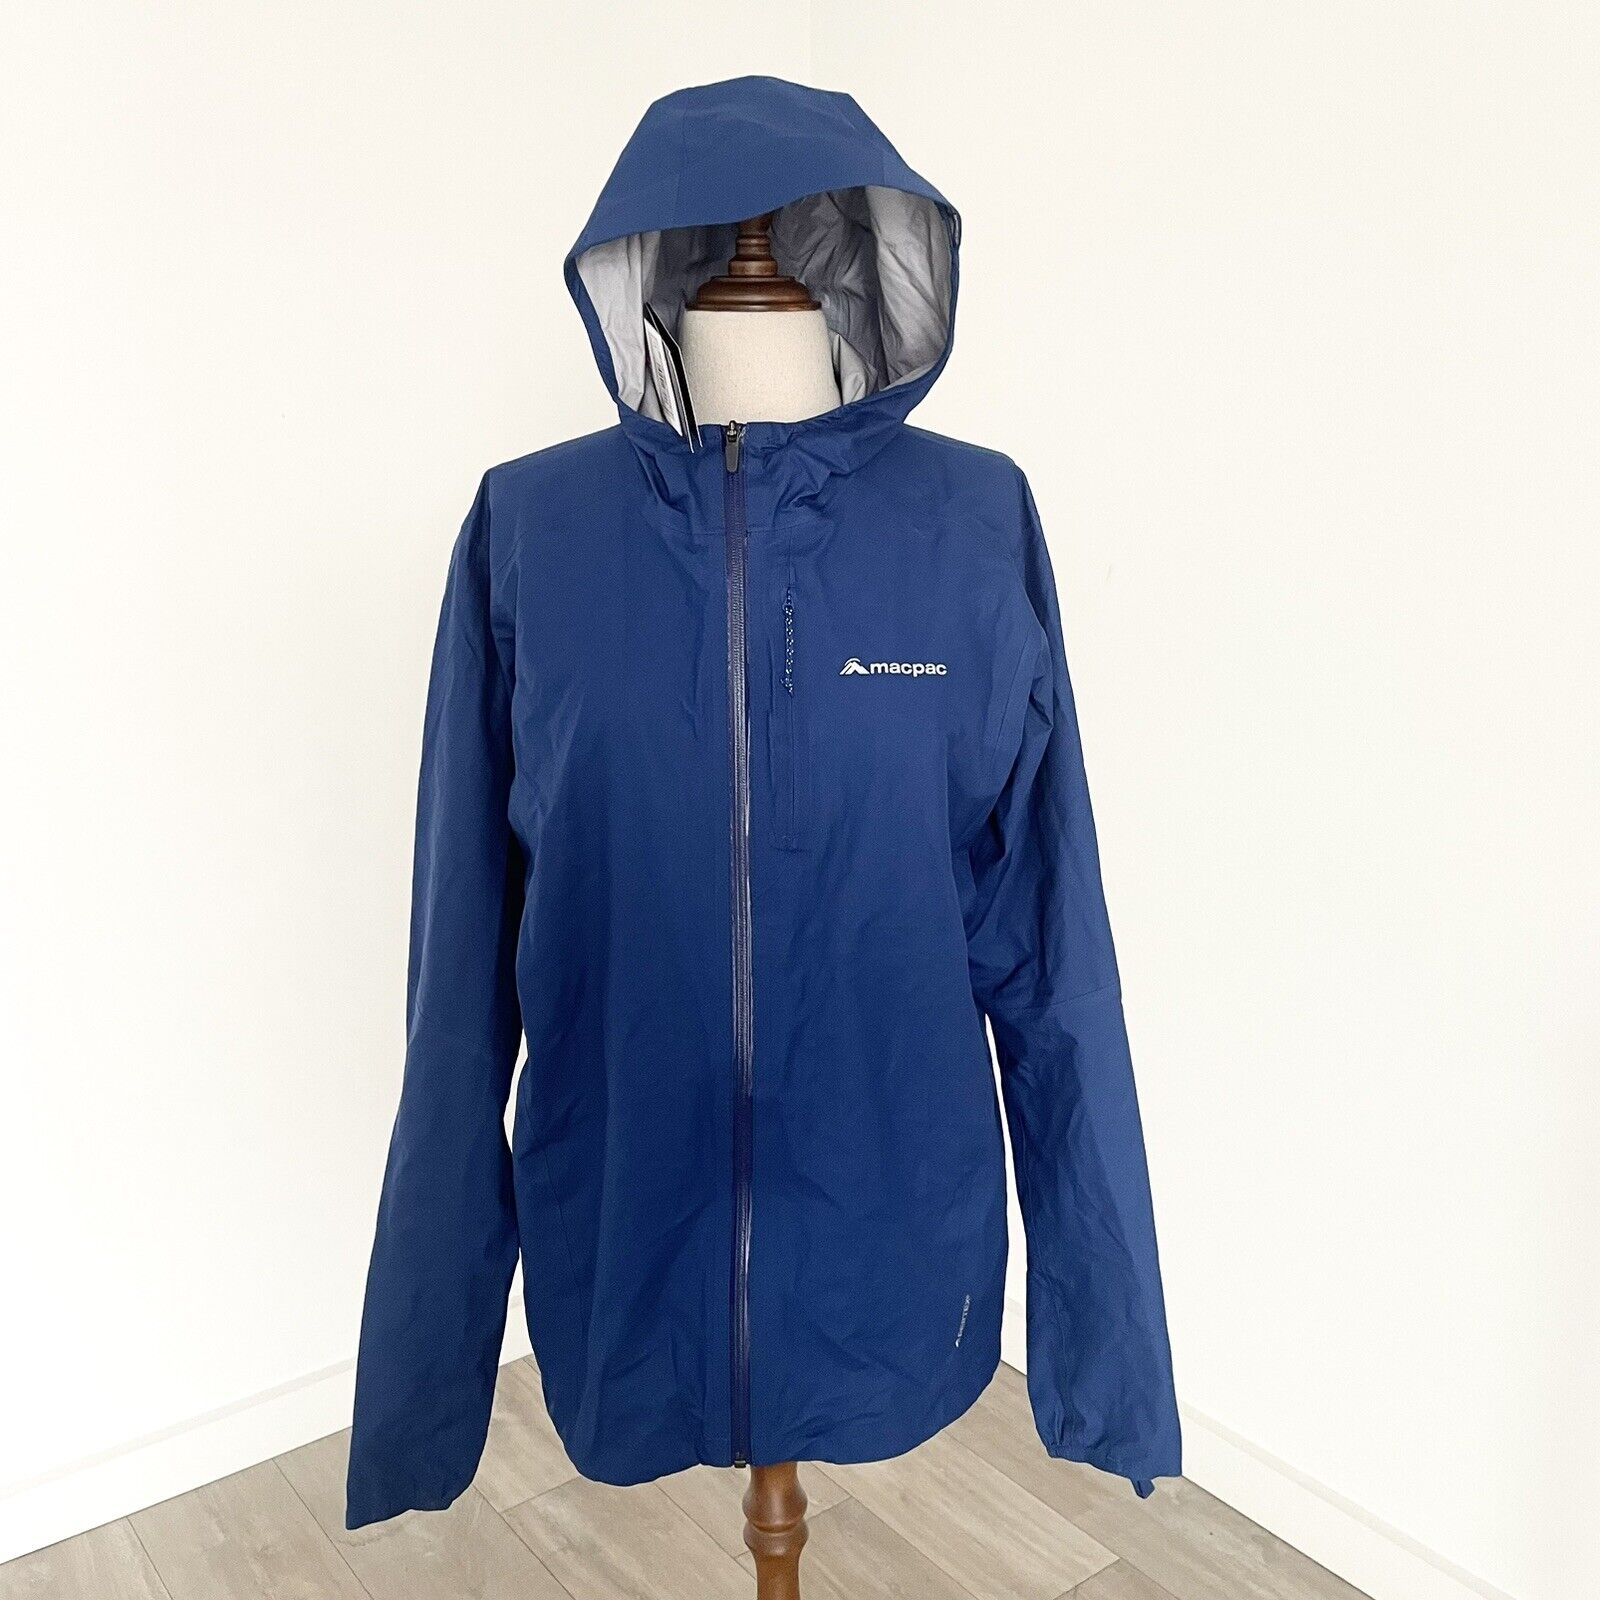 Macpac Mens Tempo Jacket lightweight hiking rain jacket size 2XL New $499 Blue